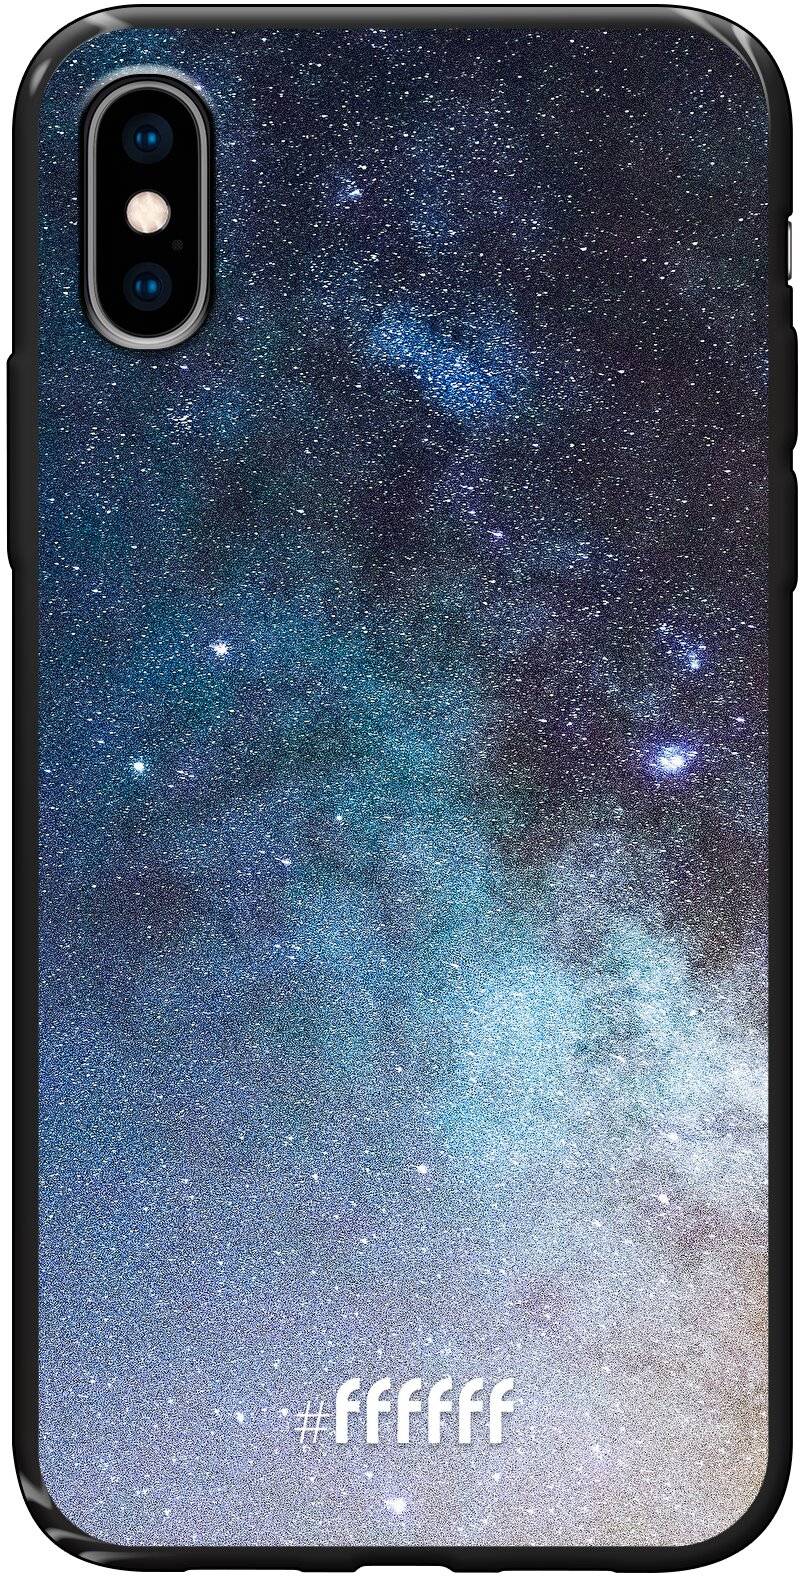 Milky Way iPhone X